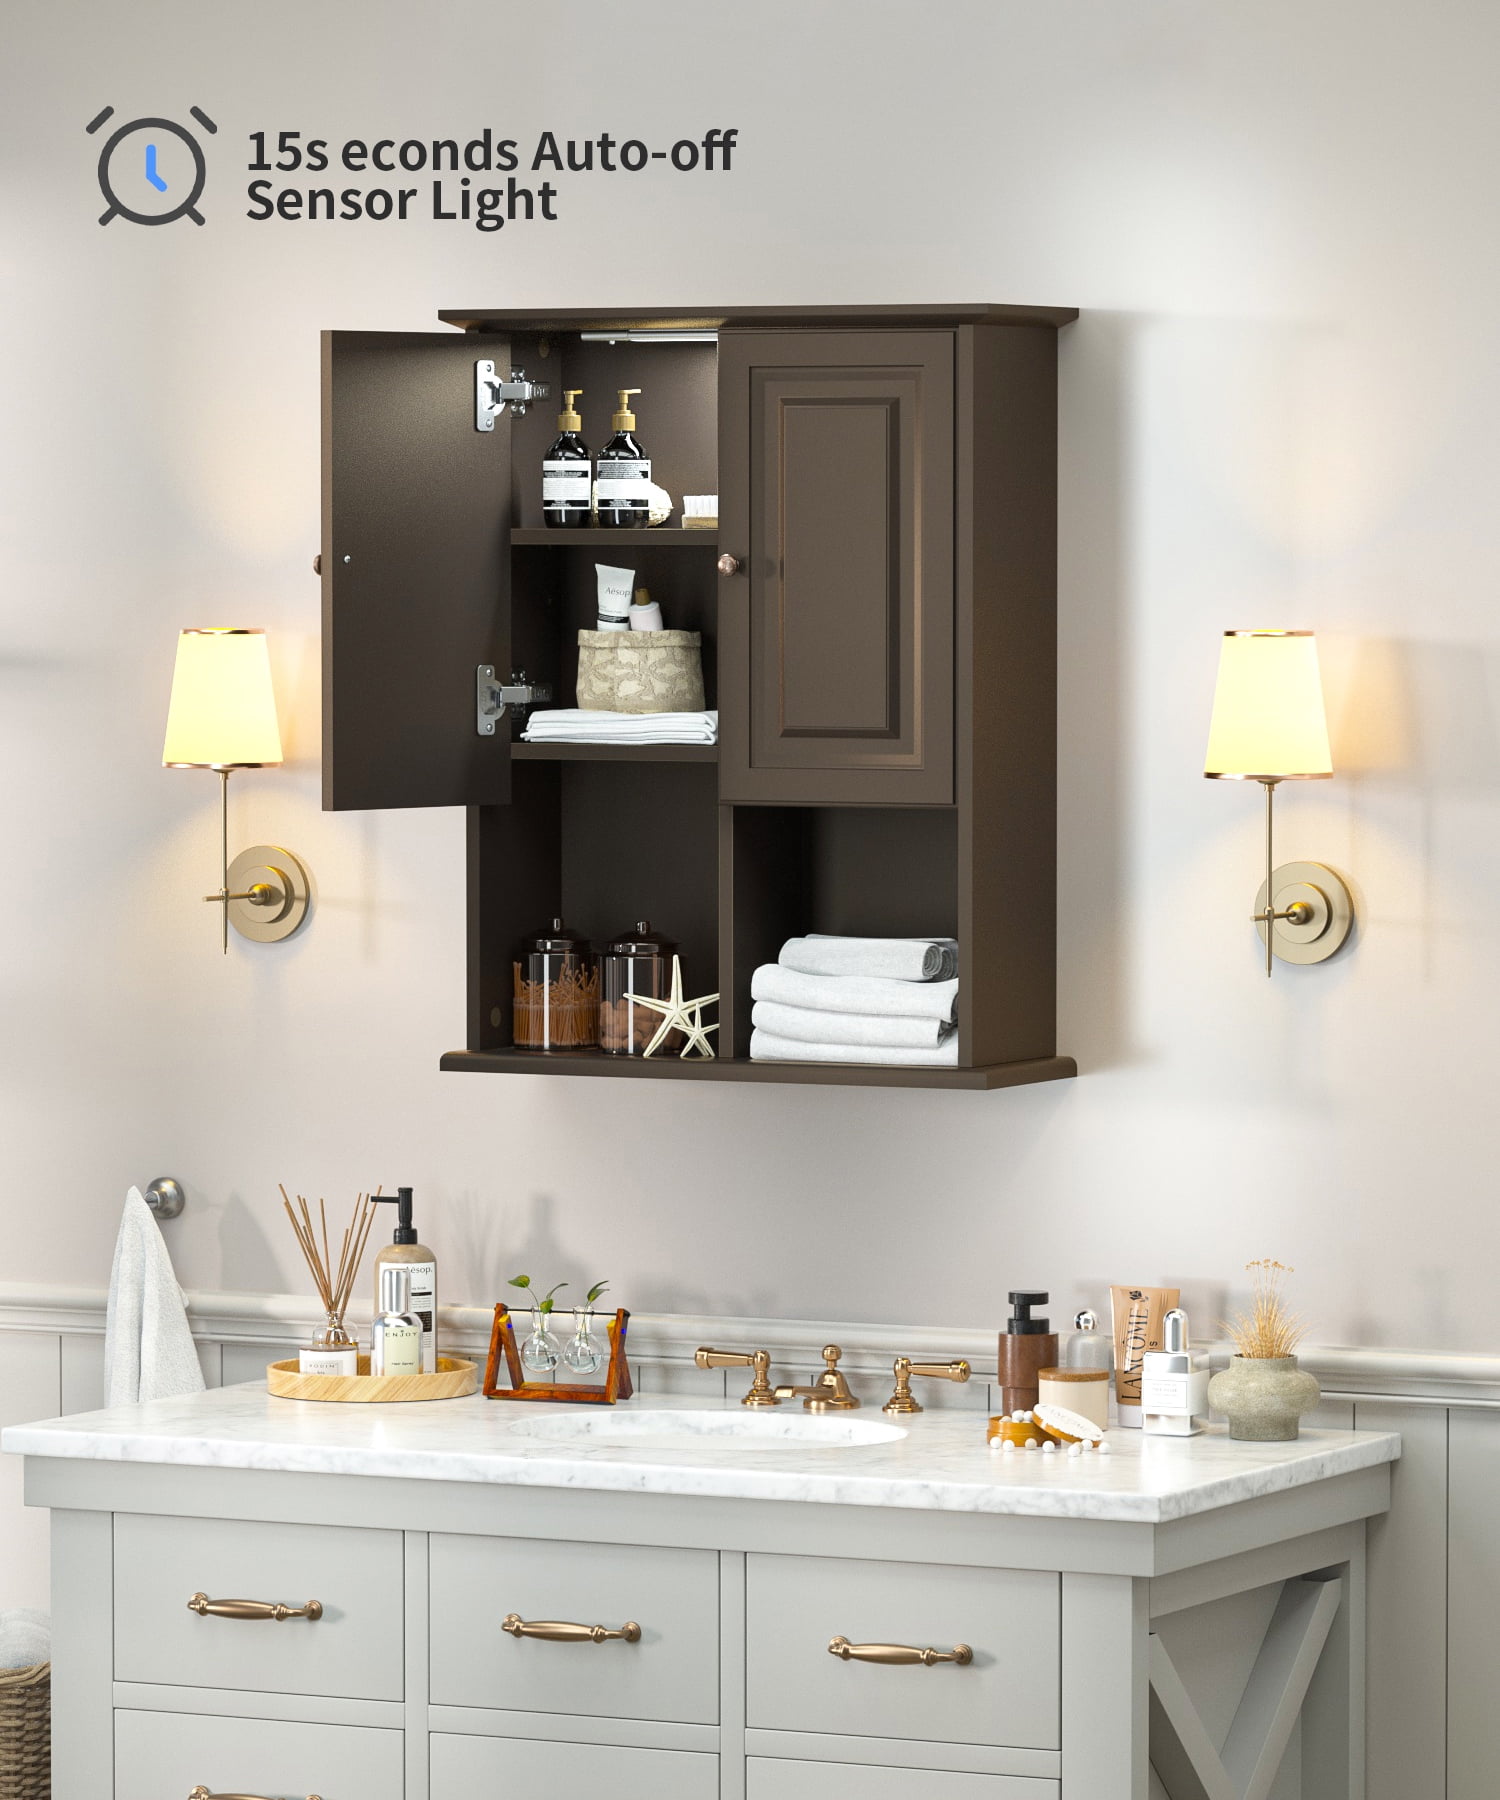  HAIOOU Bathroom Wall Cabinet with Motion Sensor LED